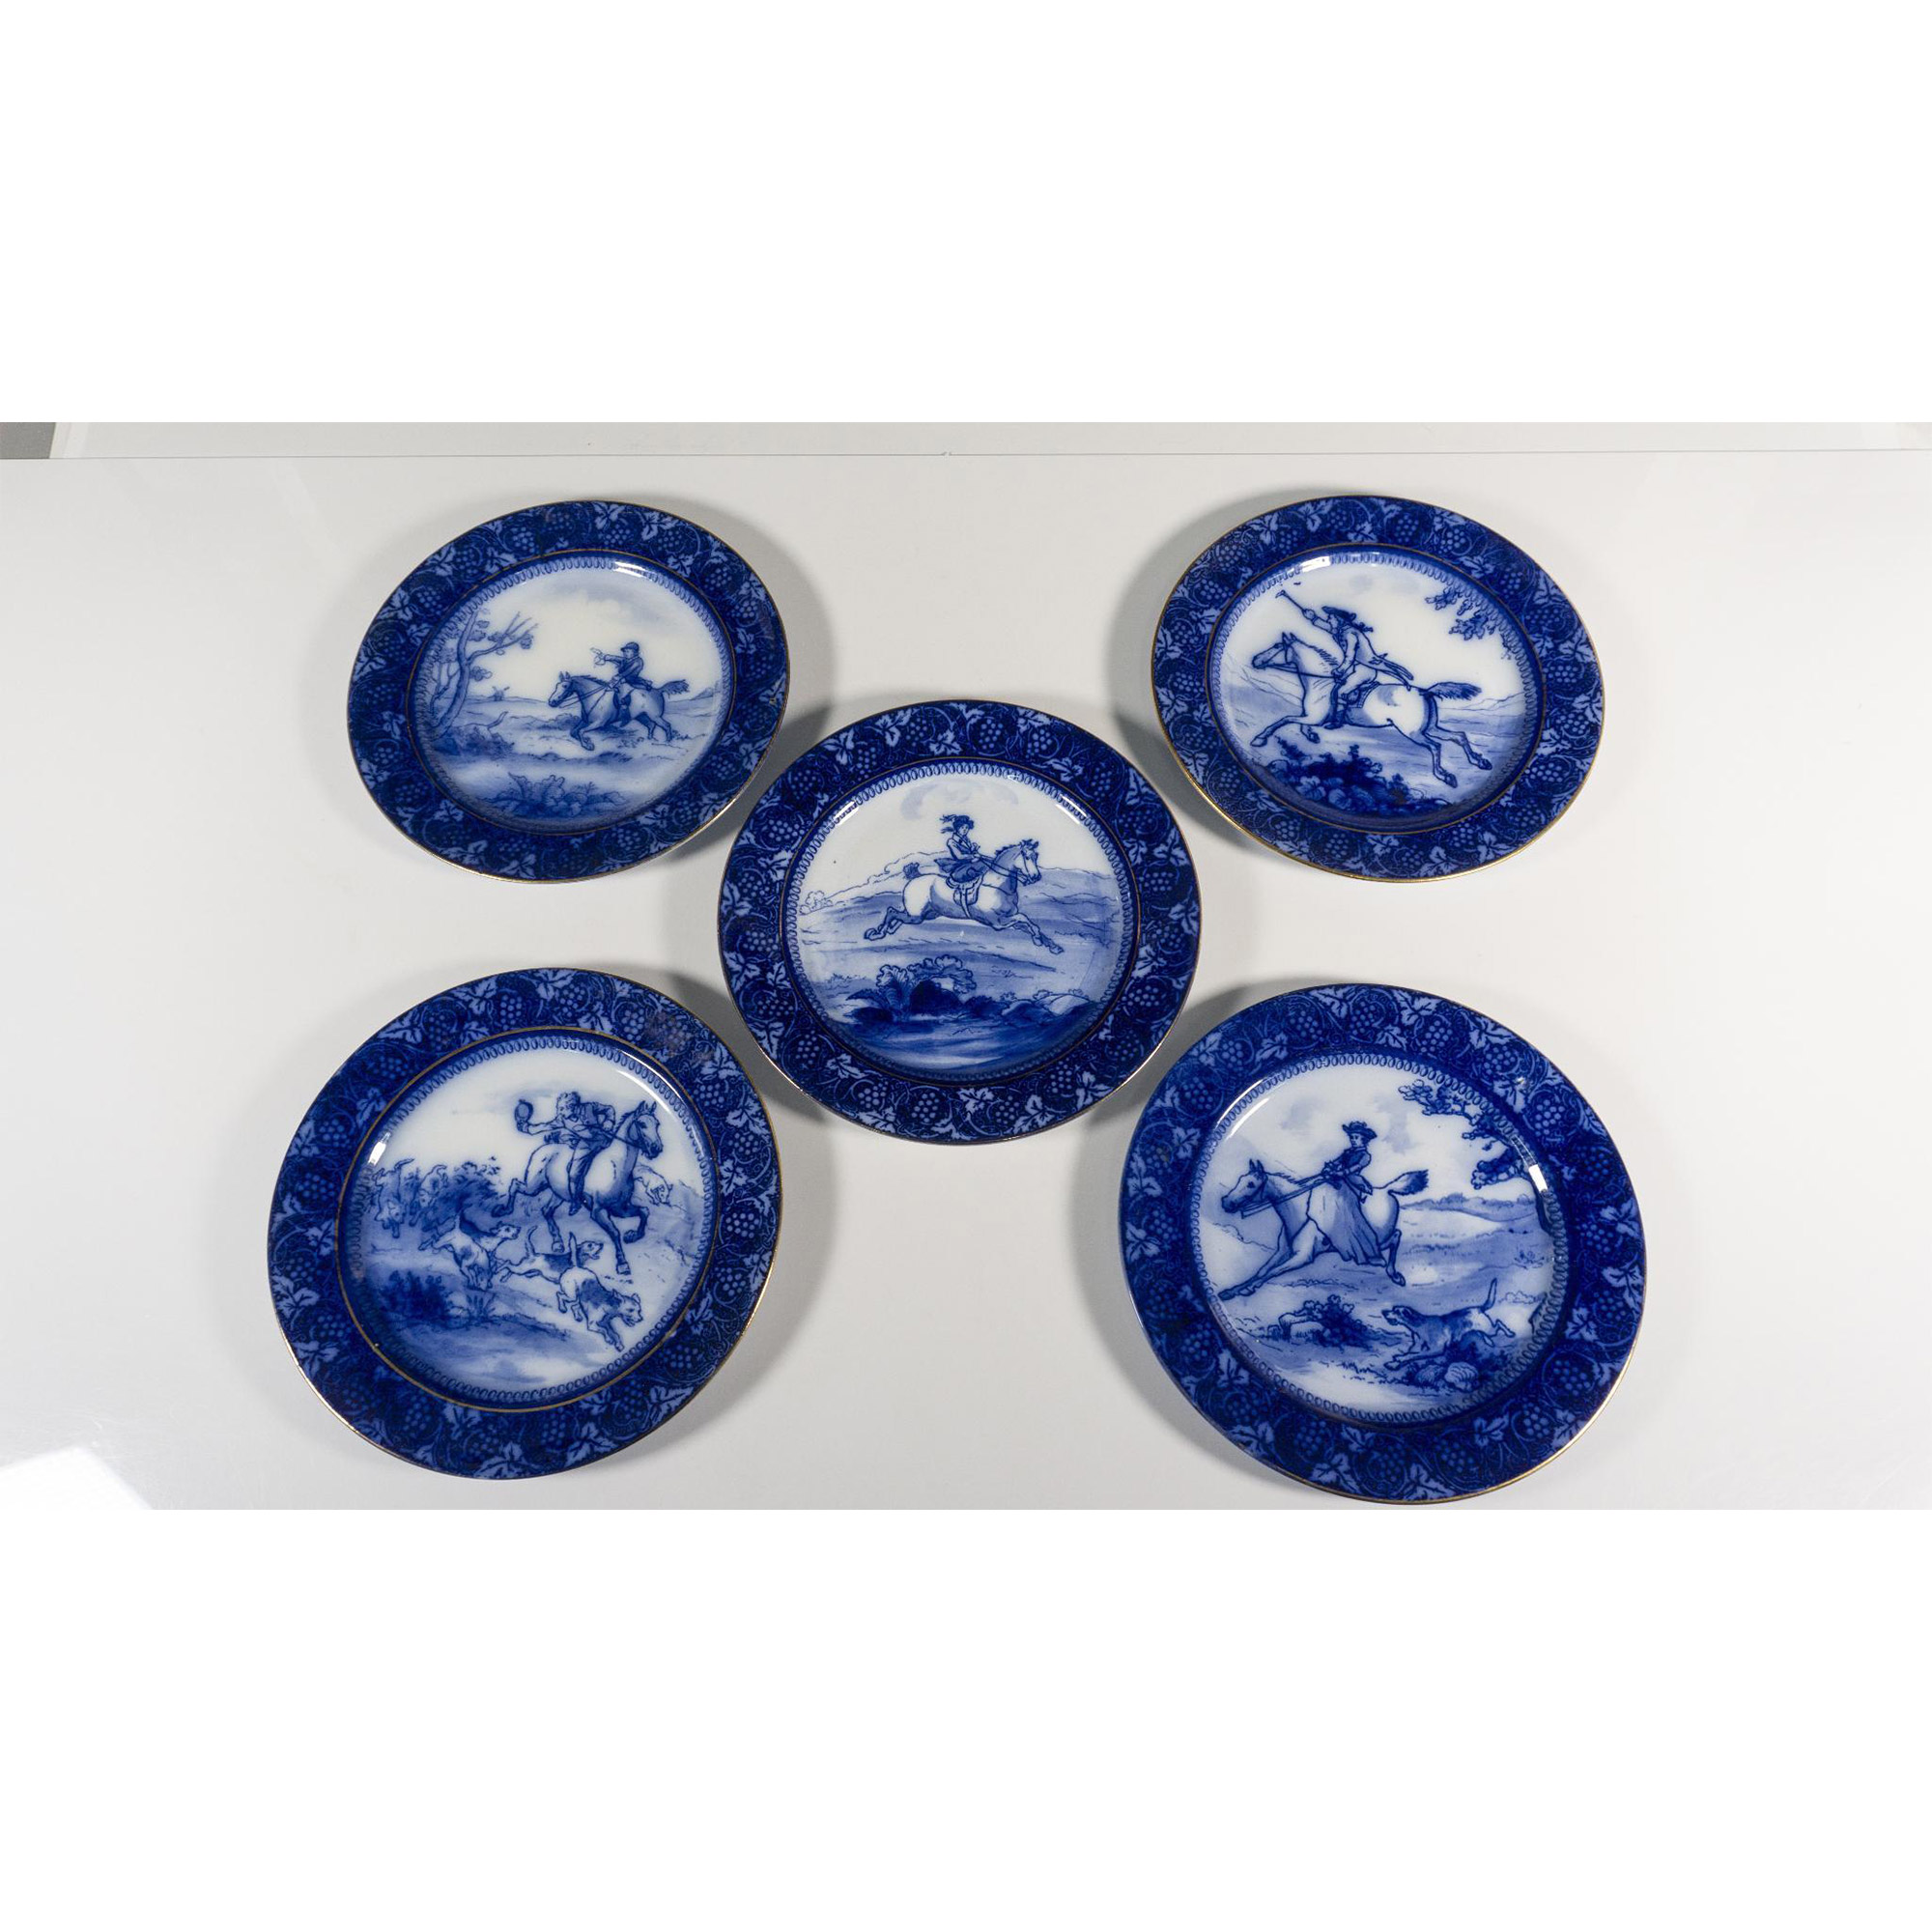 5pc Royal Doulton Flow Blue Plates, Fox Hunt Scenes - Image 2 of 3